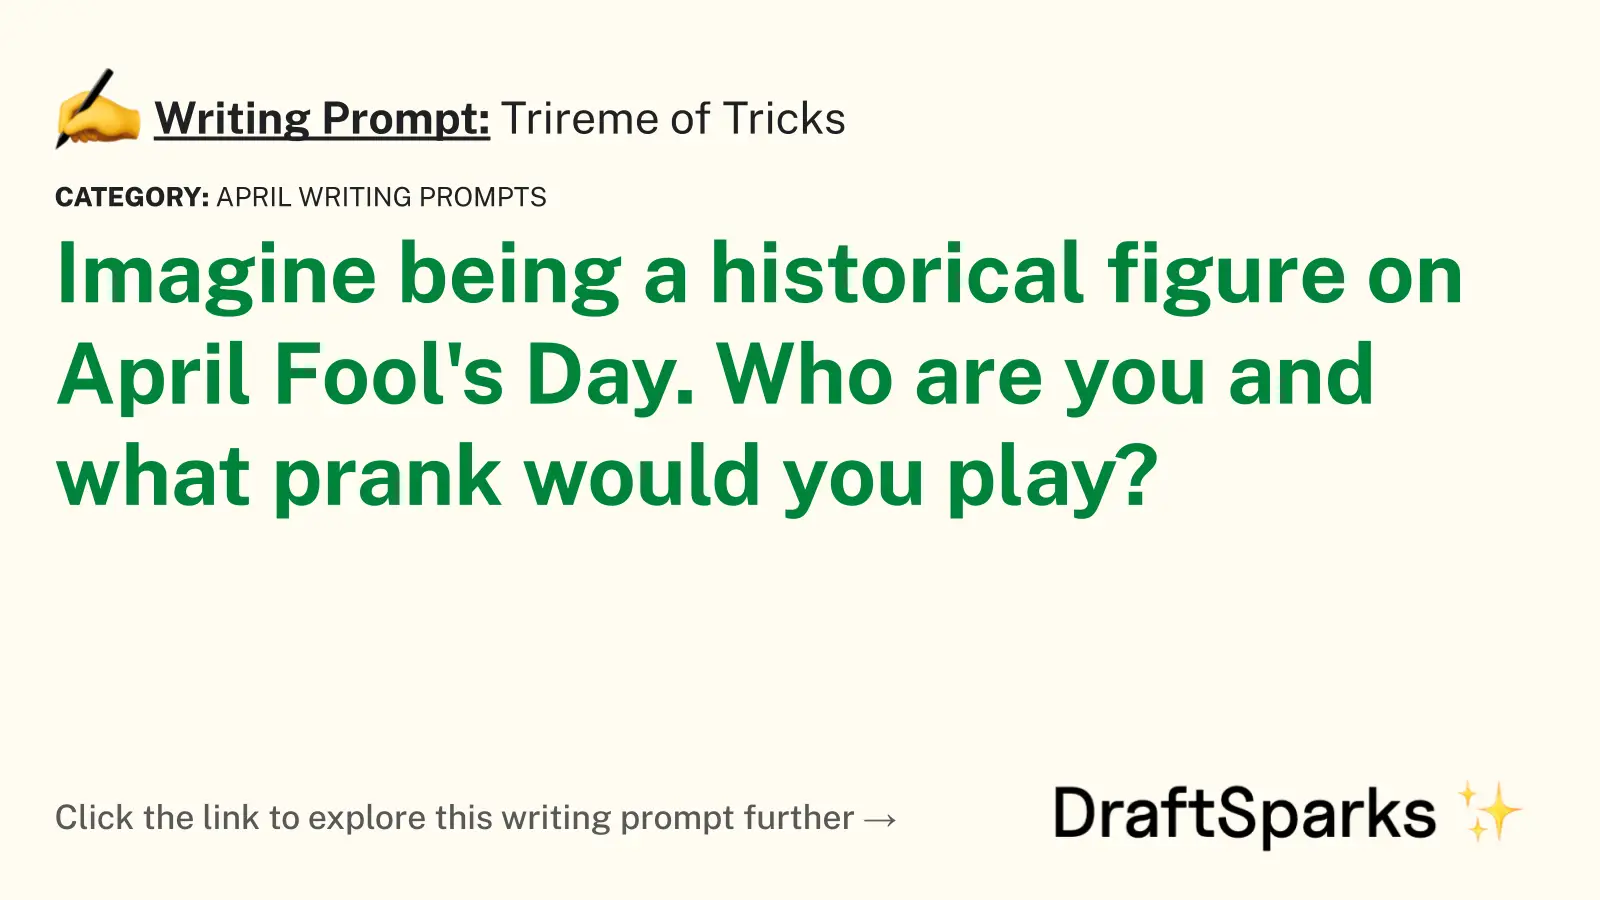 Trireme of Tricks